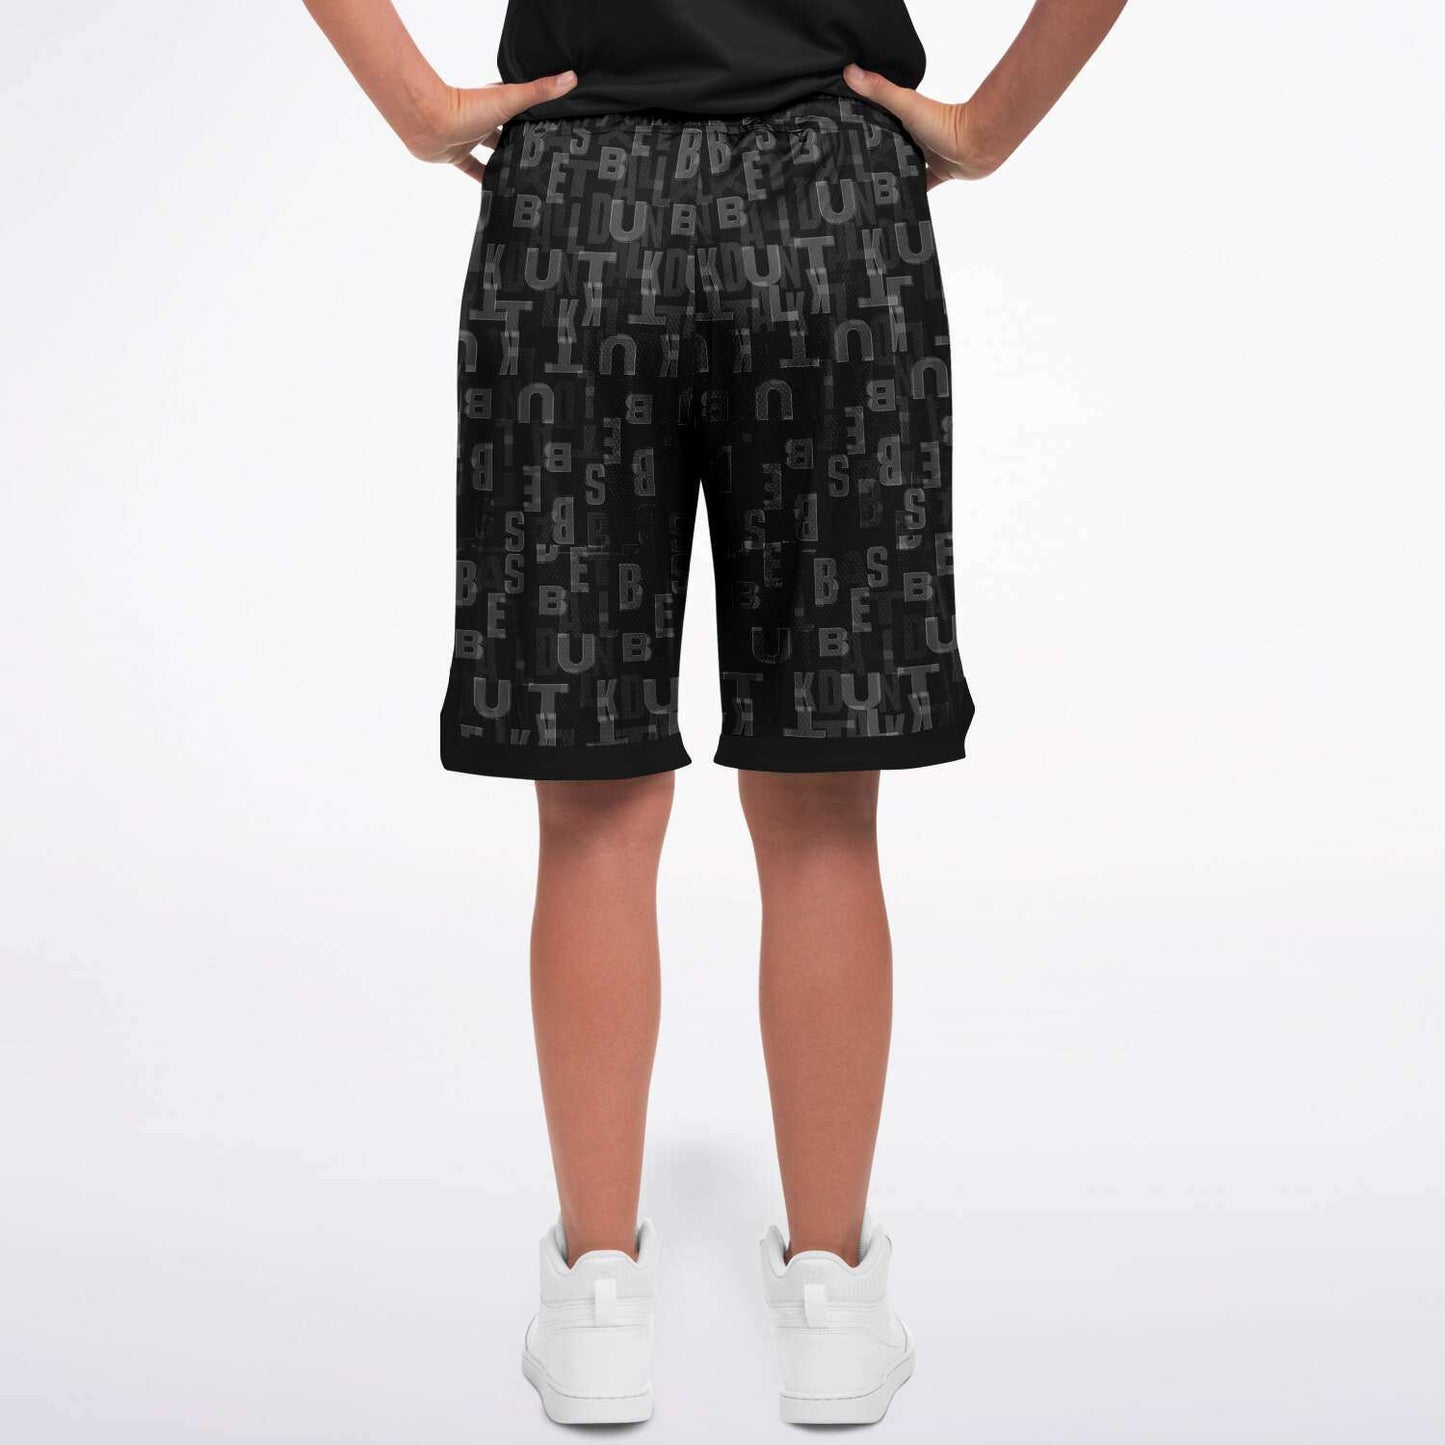 Duntalk "Court Vision" Basketball Shorts - White/Black